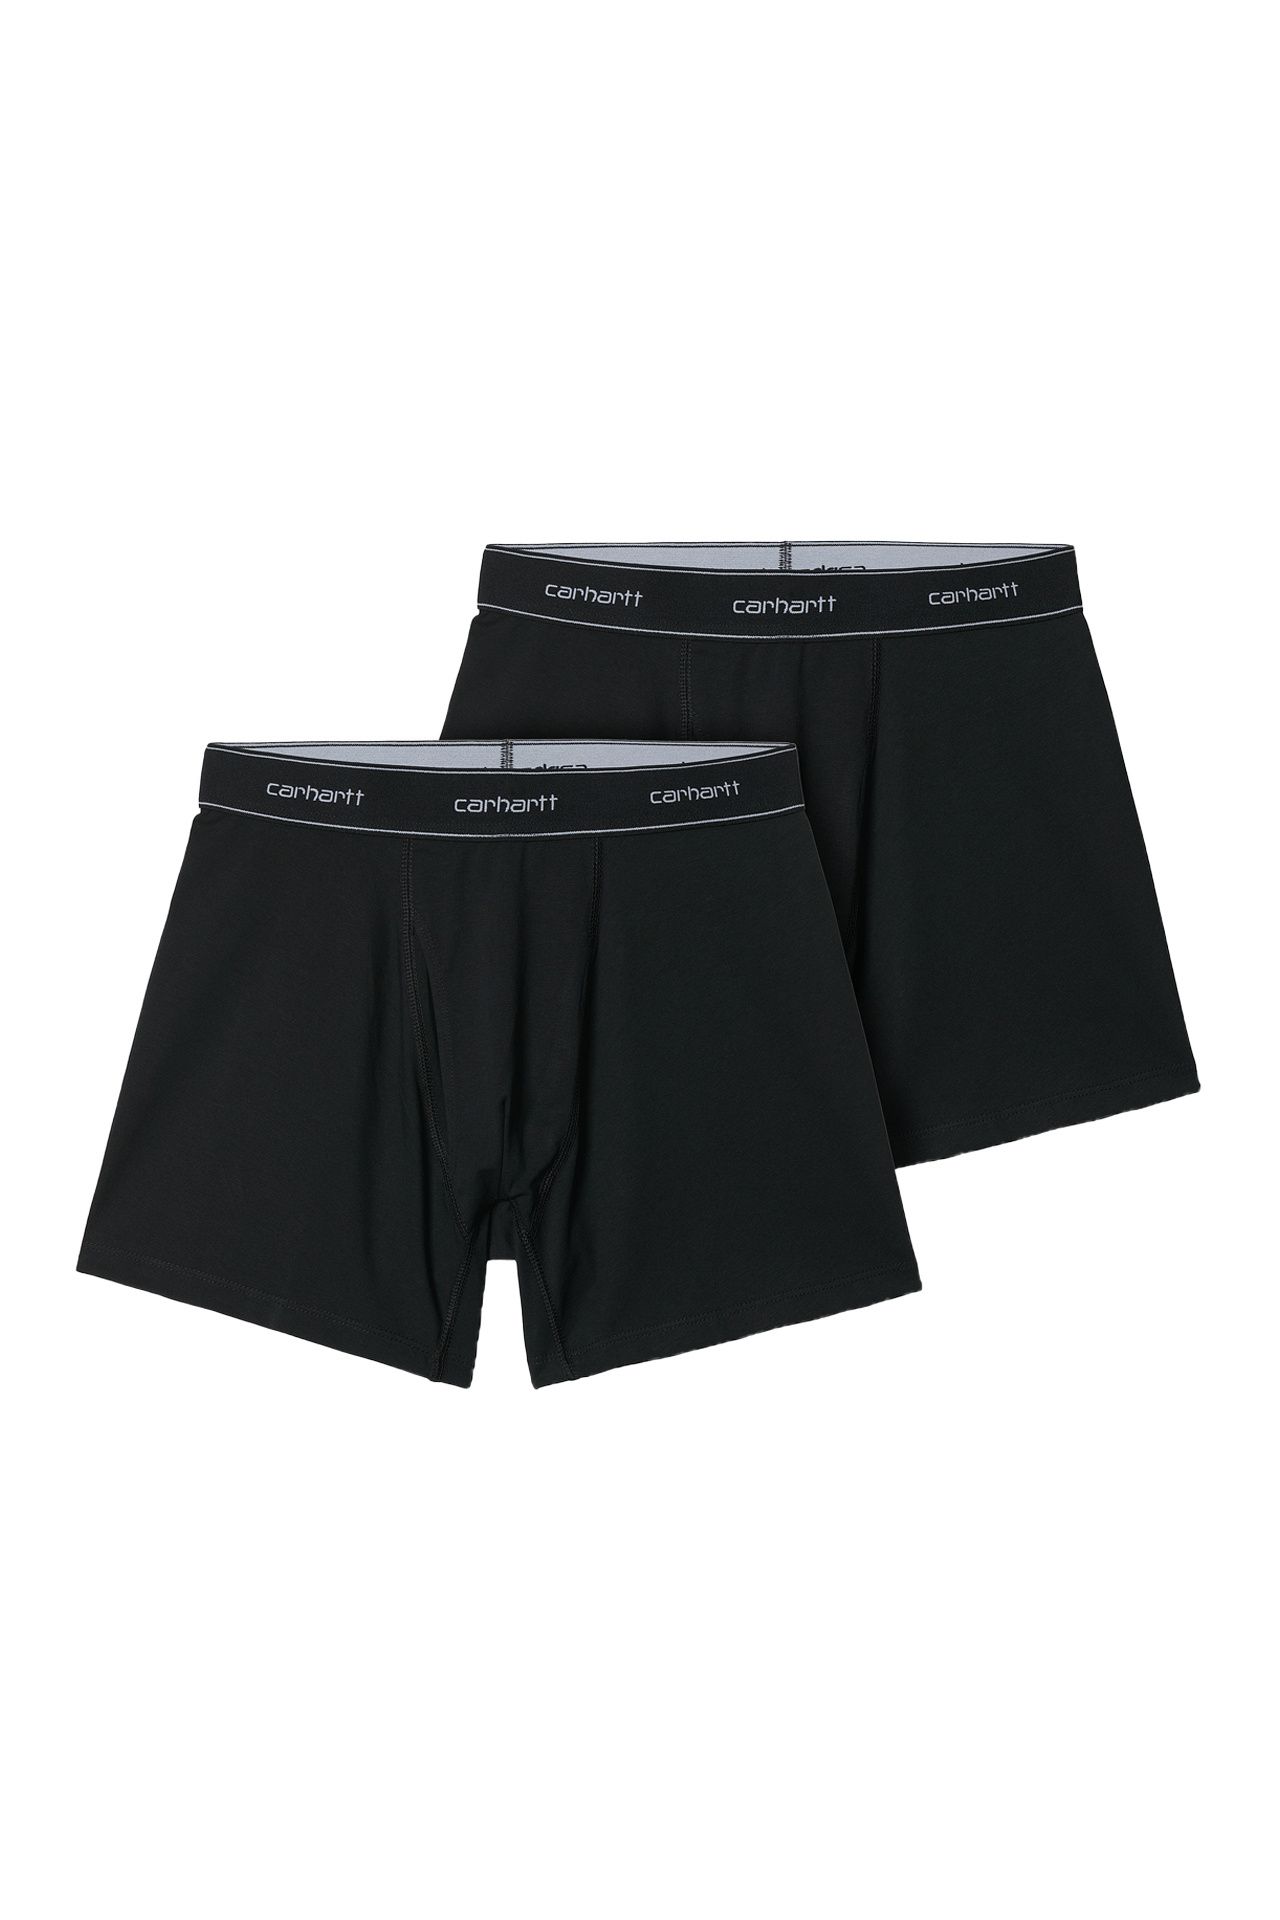 Afbeelding van Carhartt WIP Boxershort Carhartt WIP Cotton Trunks Underwear Black / Black I029375